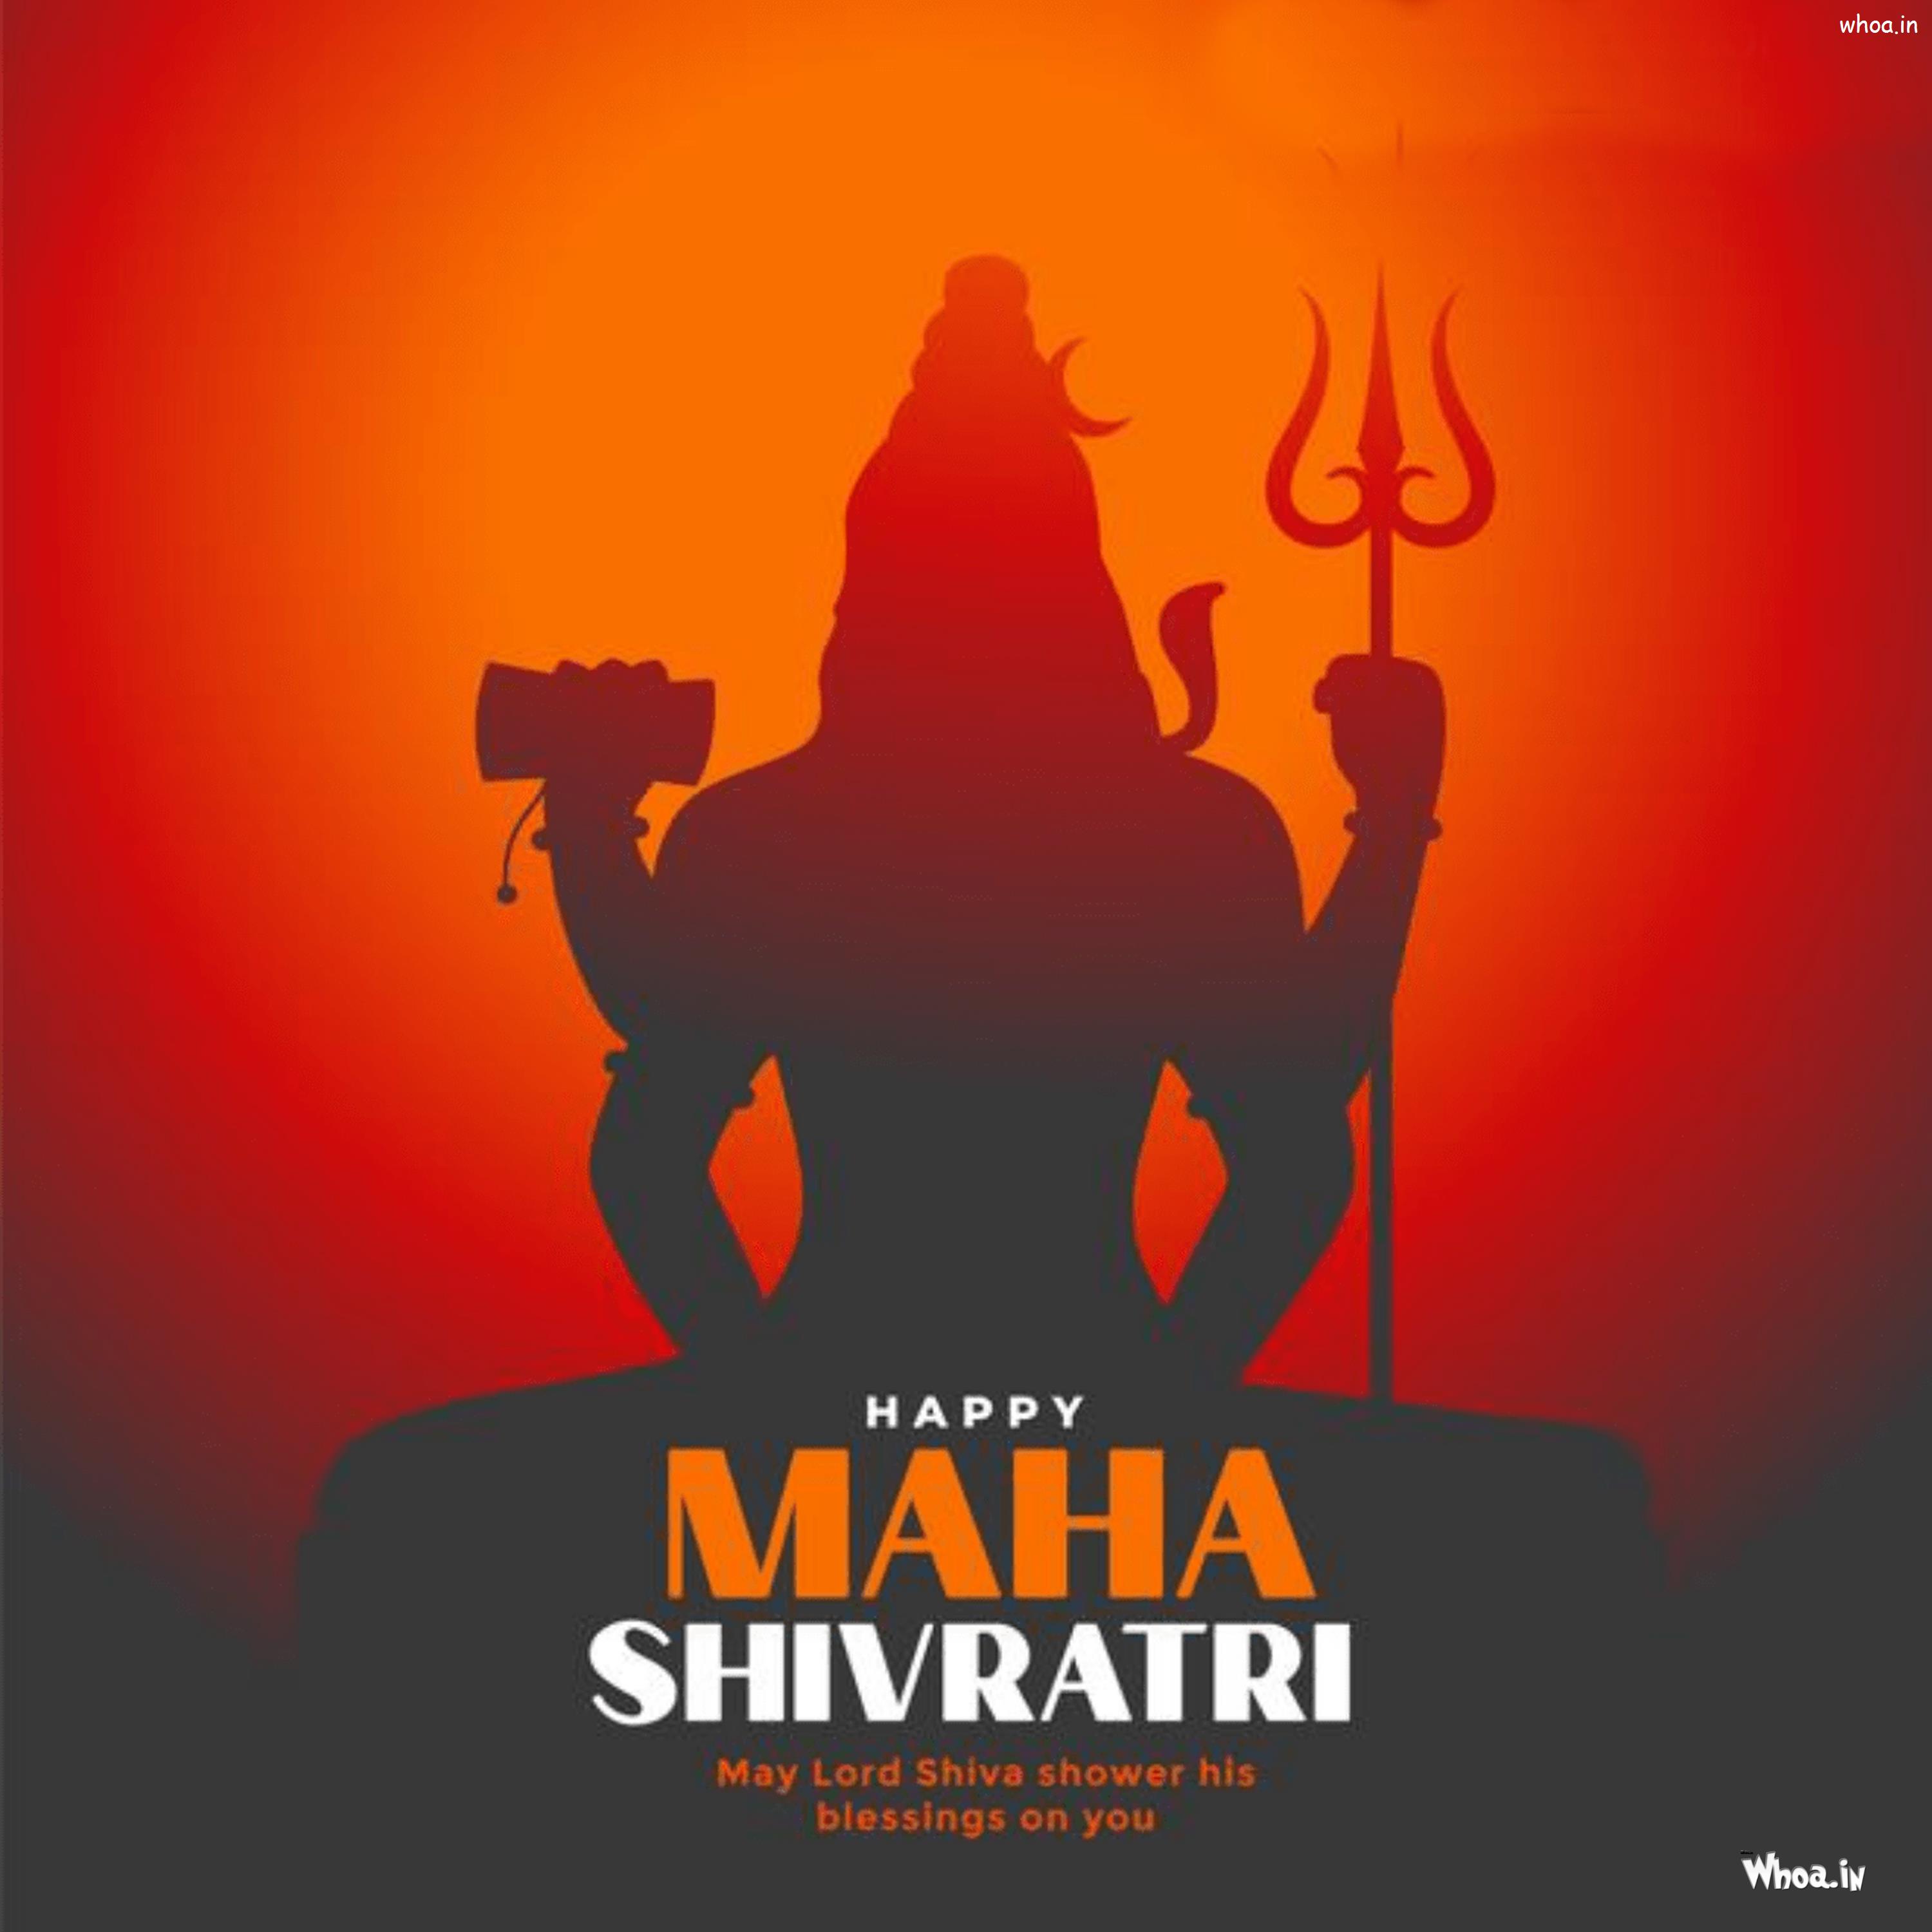 Happy Maha Shivratri Stock Photos And Image HD Wallpapers